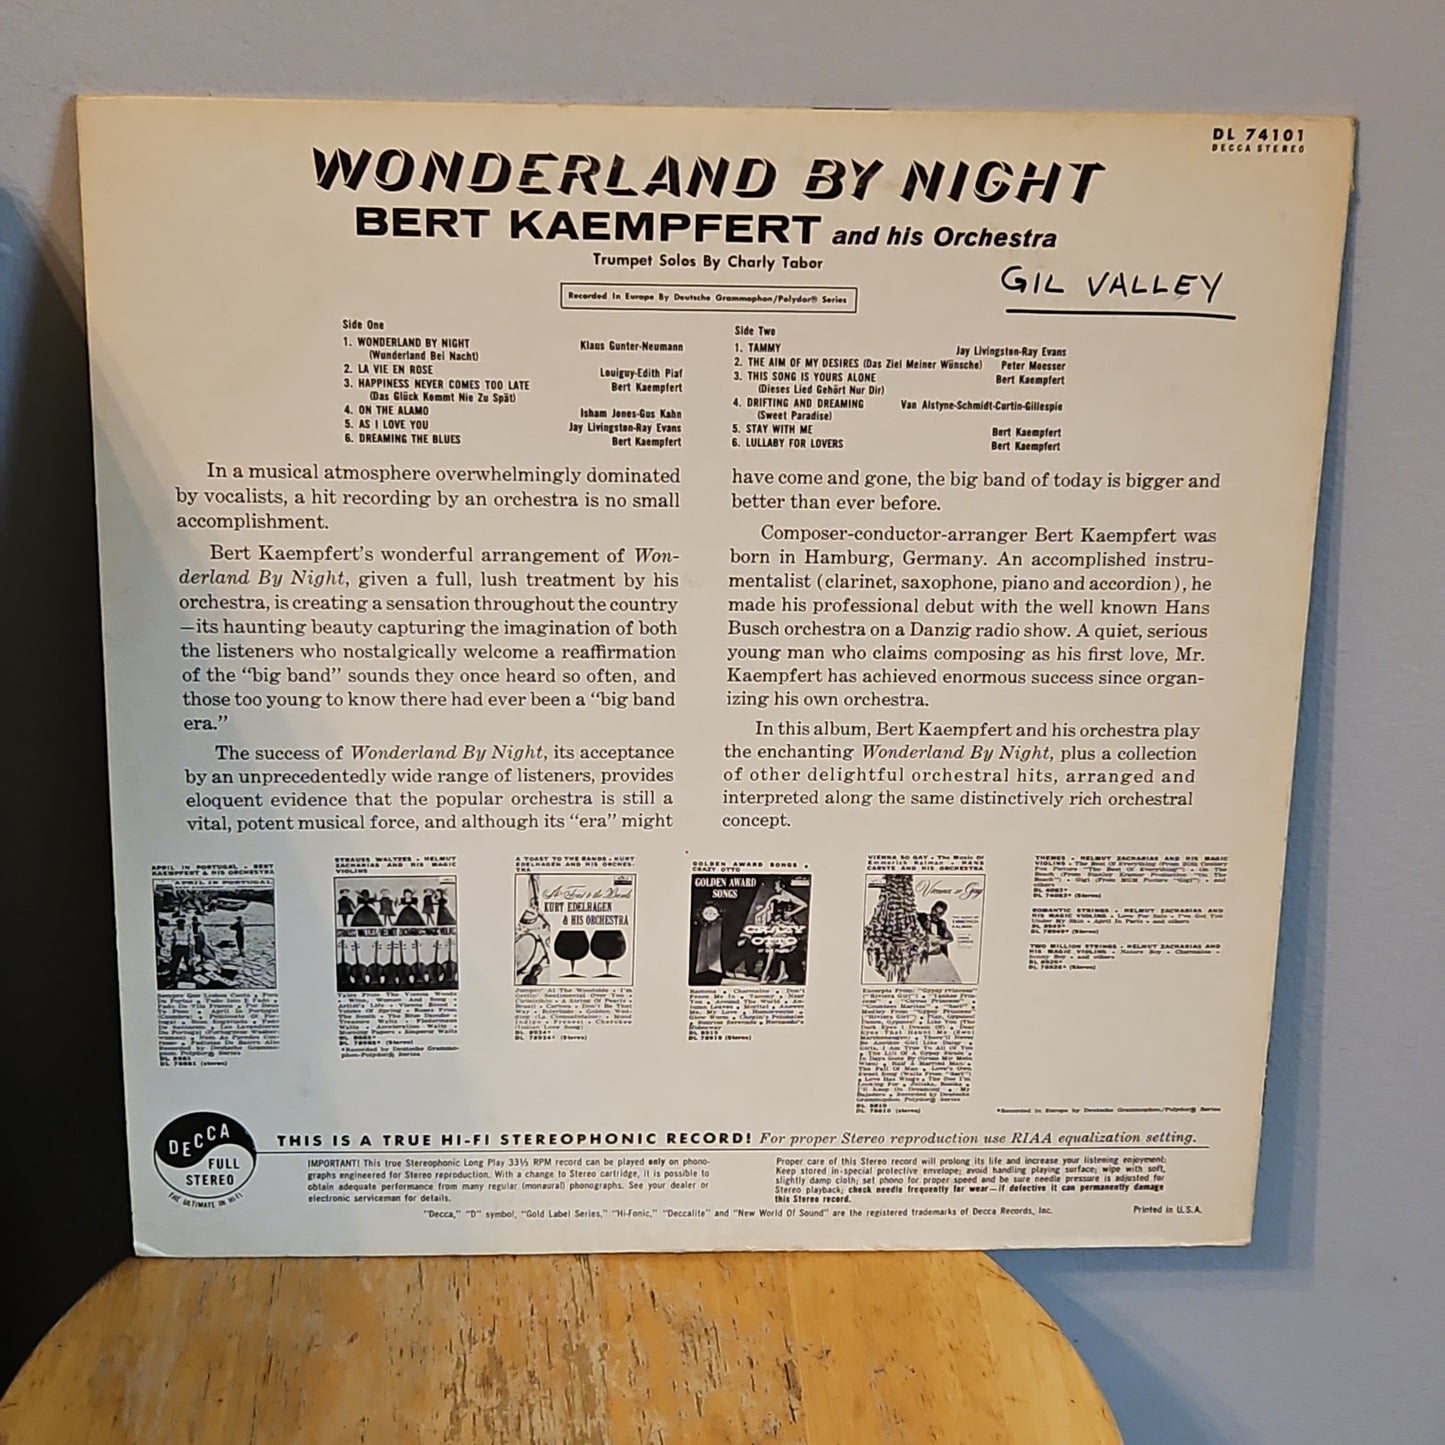 Bert Kaempfert and his Orchestra Wonderland By Night By Decca Records